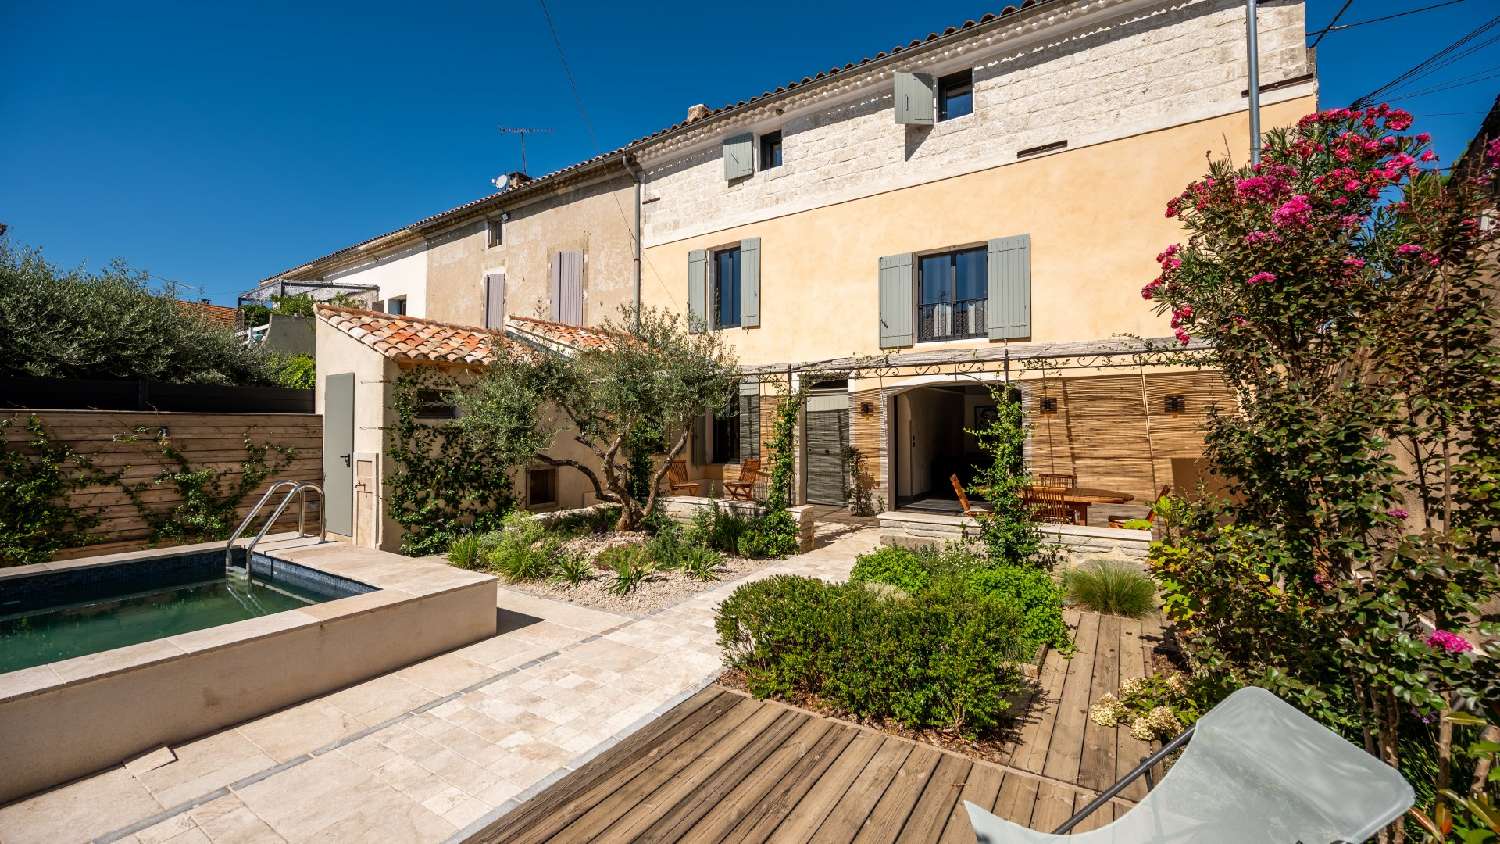  à vendre villa Maillane Bouches-du-Rhône 1